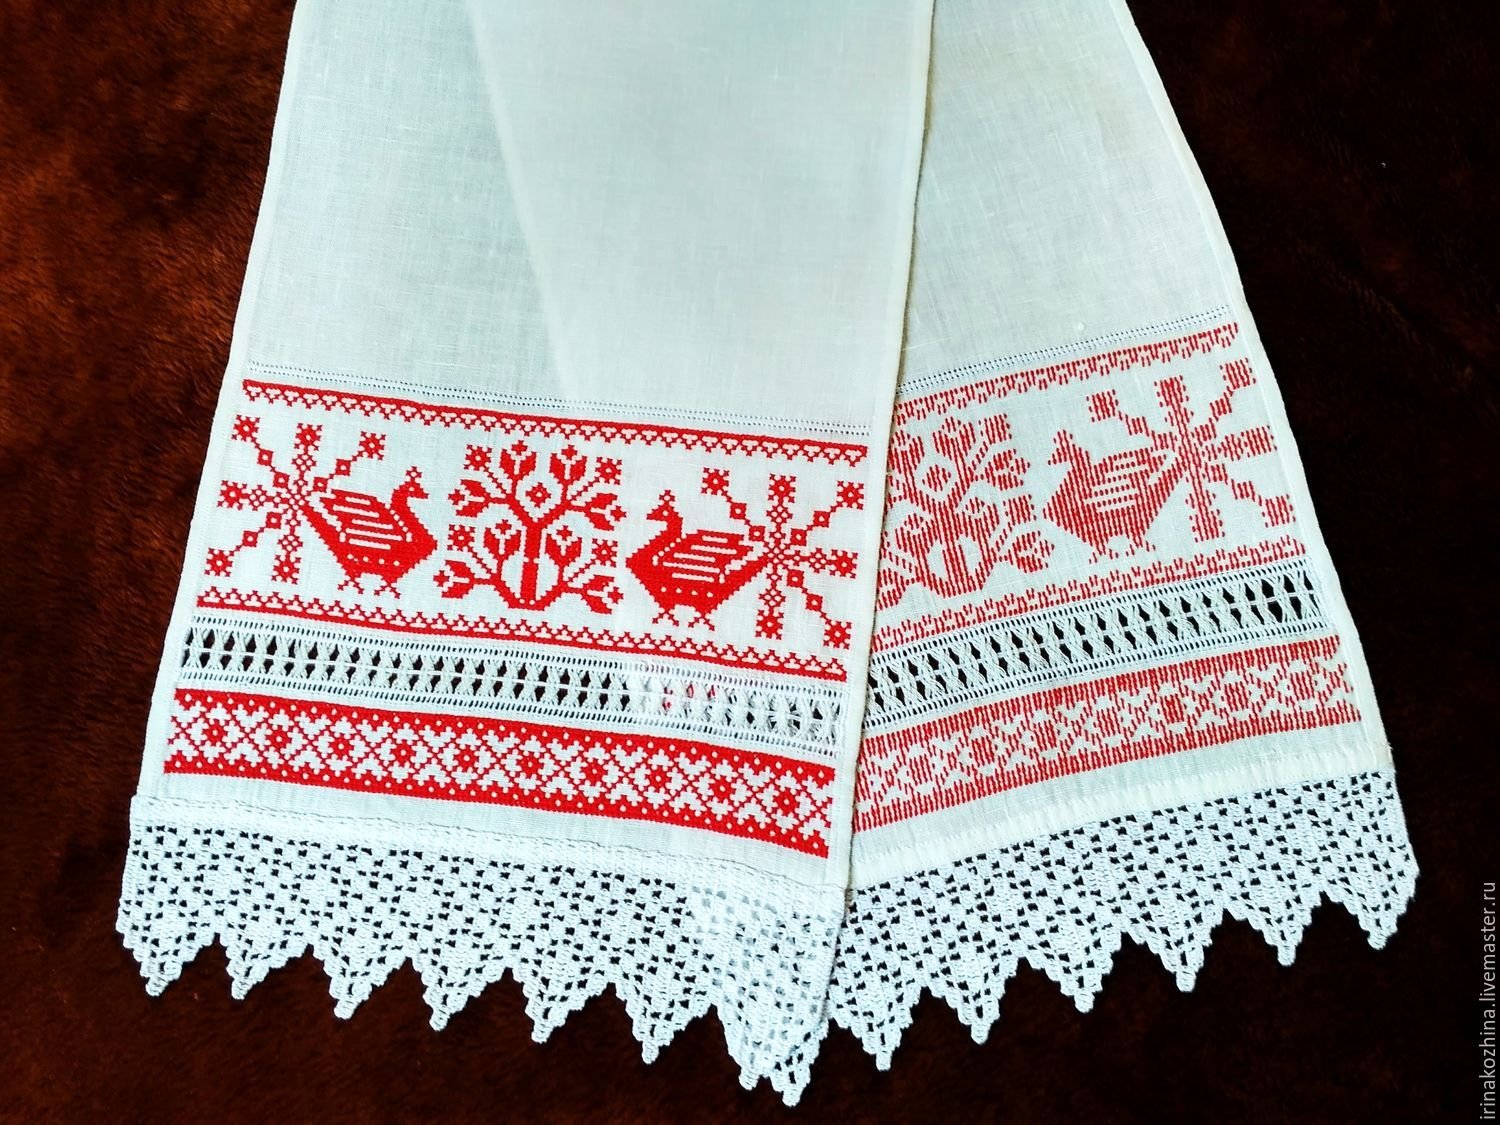 Русская народная вышивка на полотенце